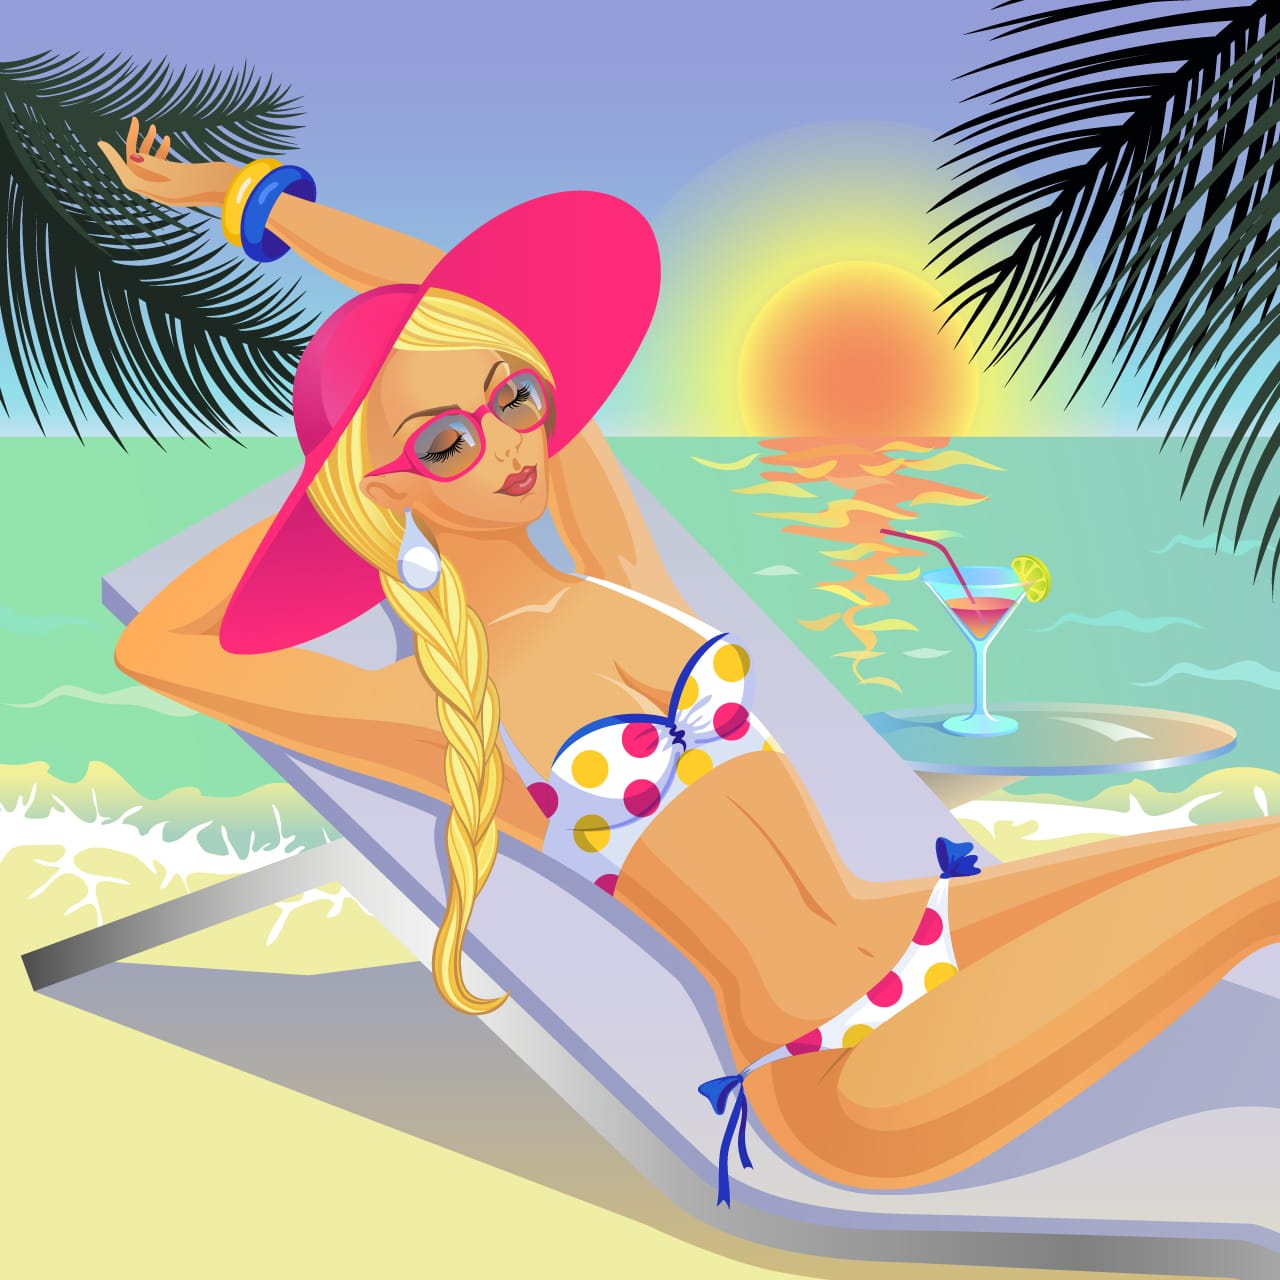 Girl polkadot bikini hat glasses having rest with cocktail sunny tropical beach